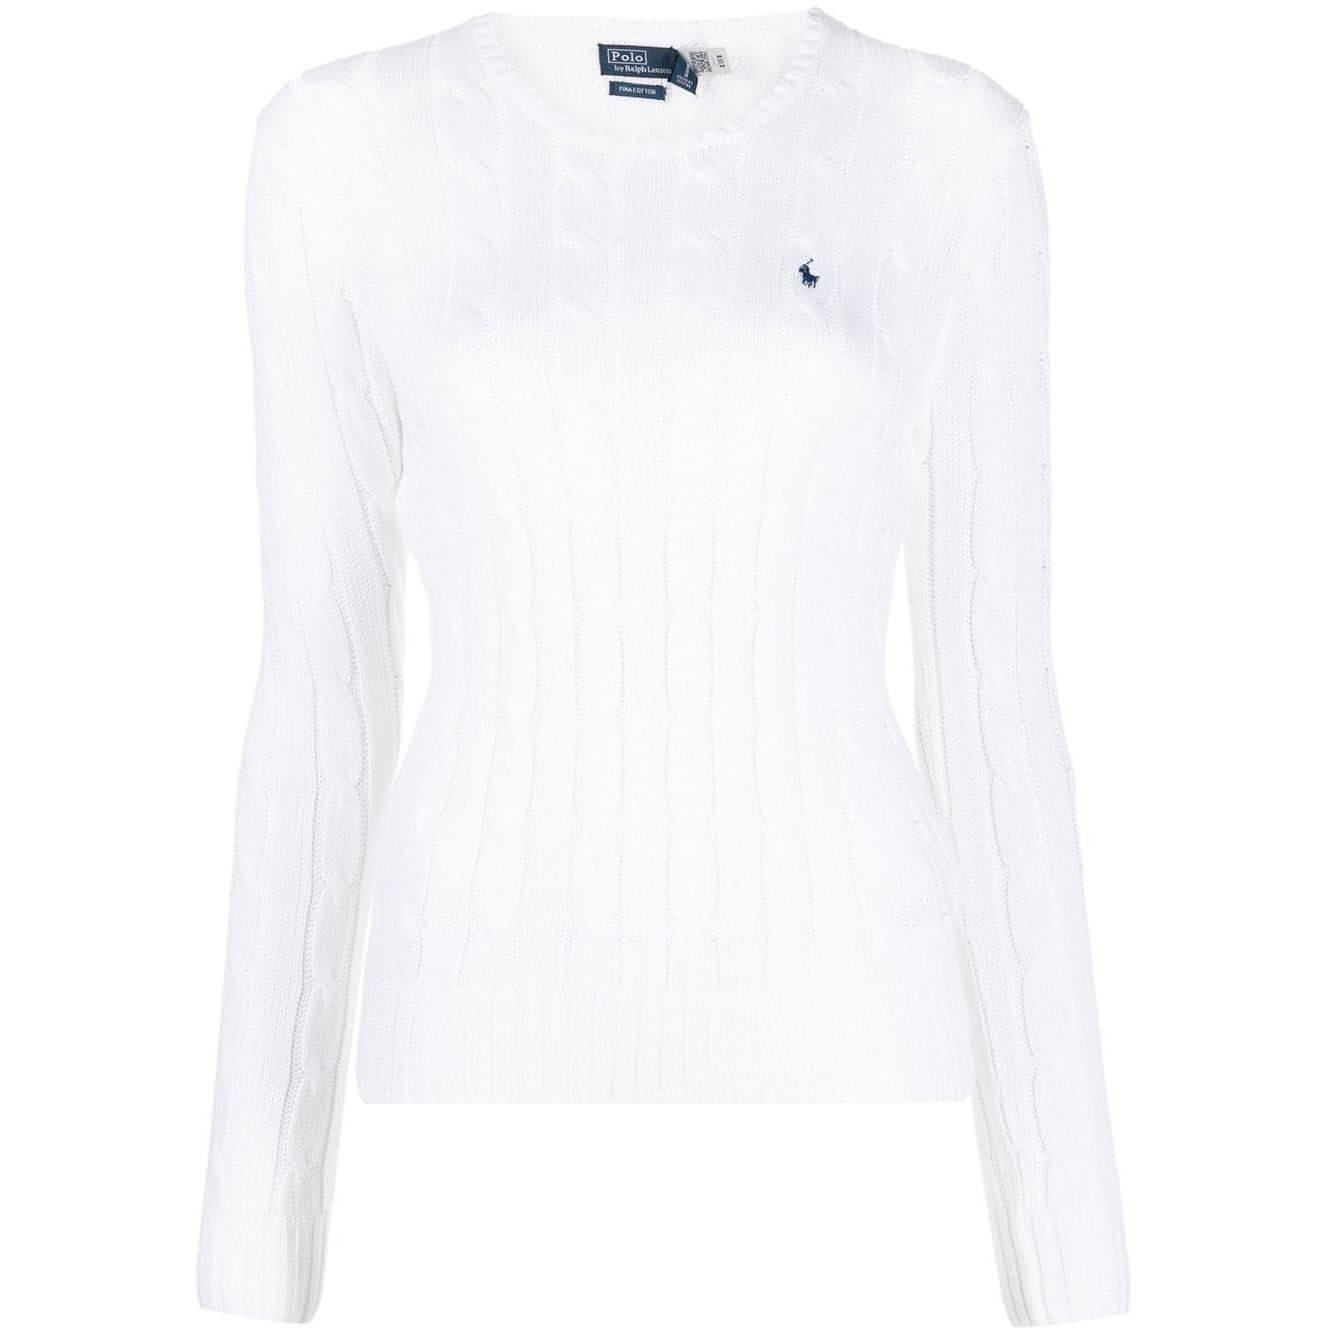 POLO RALPH LAUREN moteriškas baltas megztinis Julianna pullover